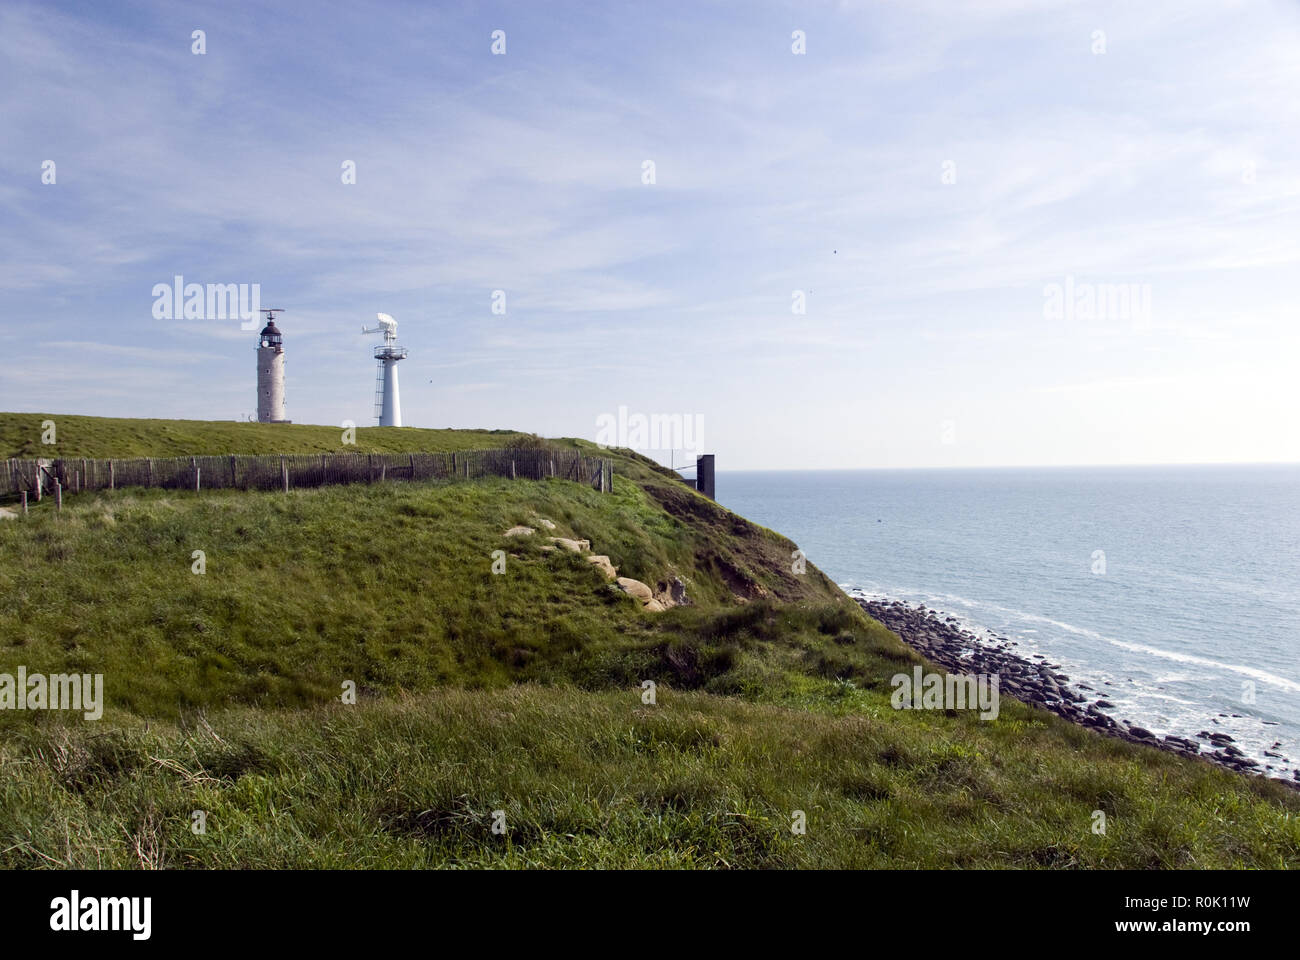 A lighthouse and radar tower stand atop Cap Gris Nez (grey nose cape), overlooking the English Channel, Cote d'Opale, Pas-de-Calais, France. Stock Photo